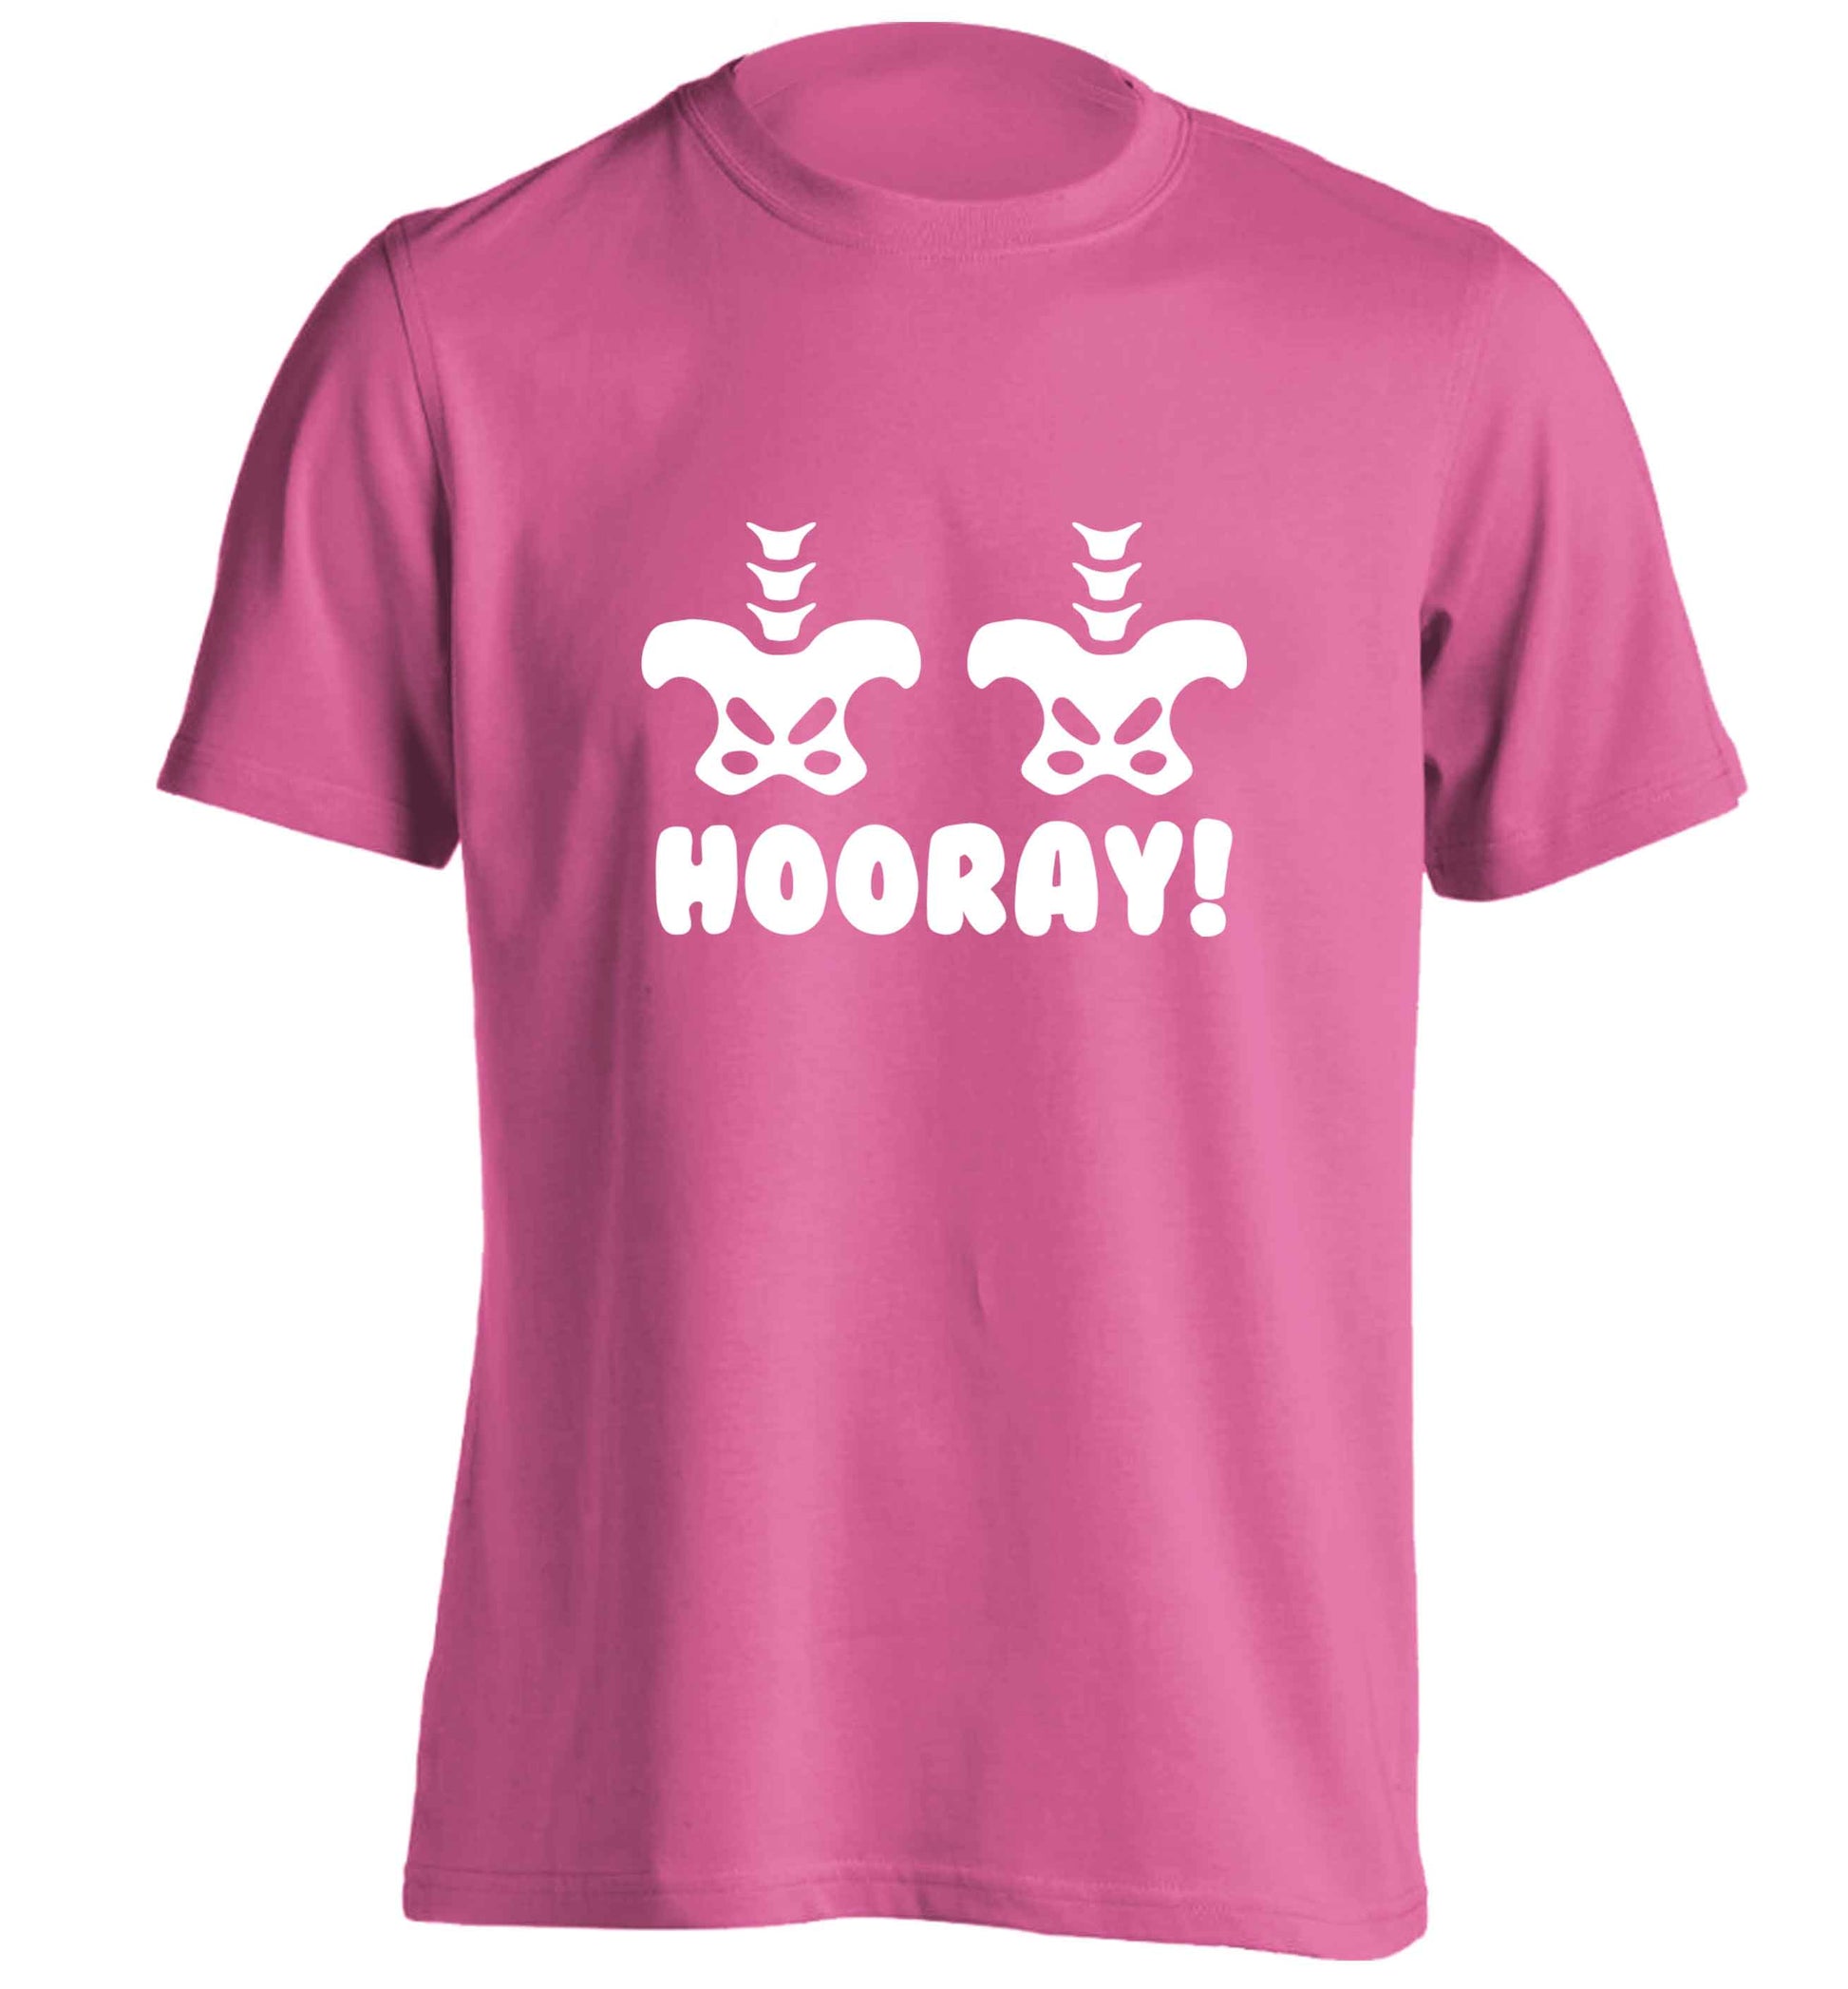 Hip Hip Hooray! adults unisex pink Tshirt 2XL